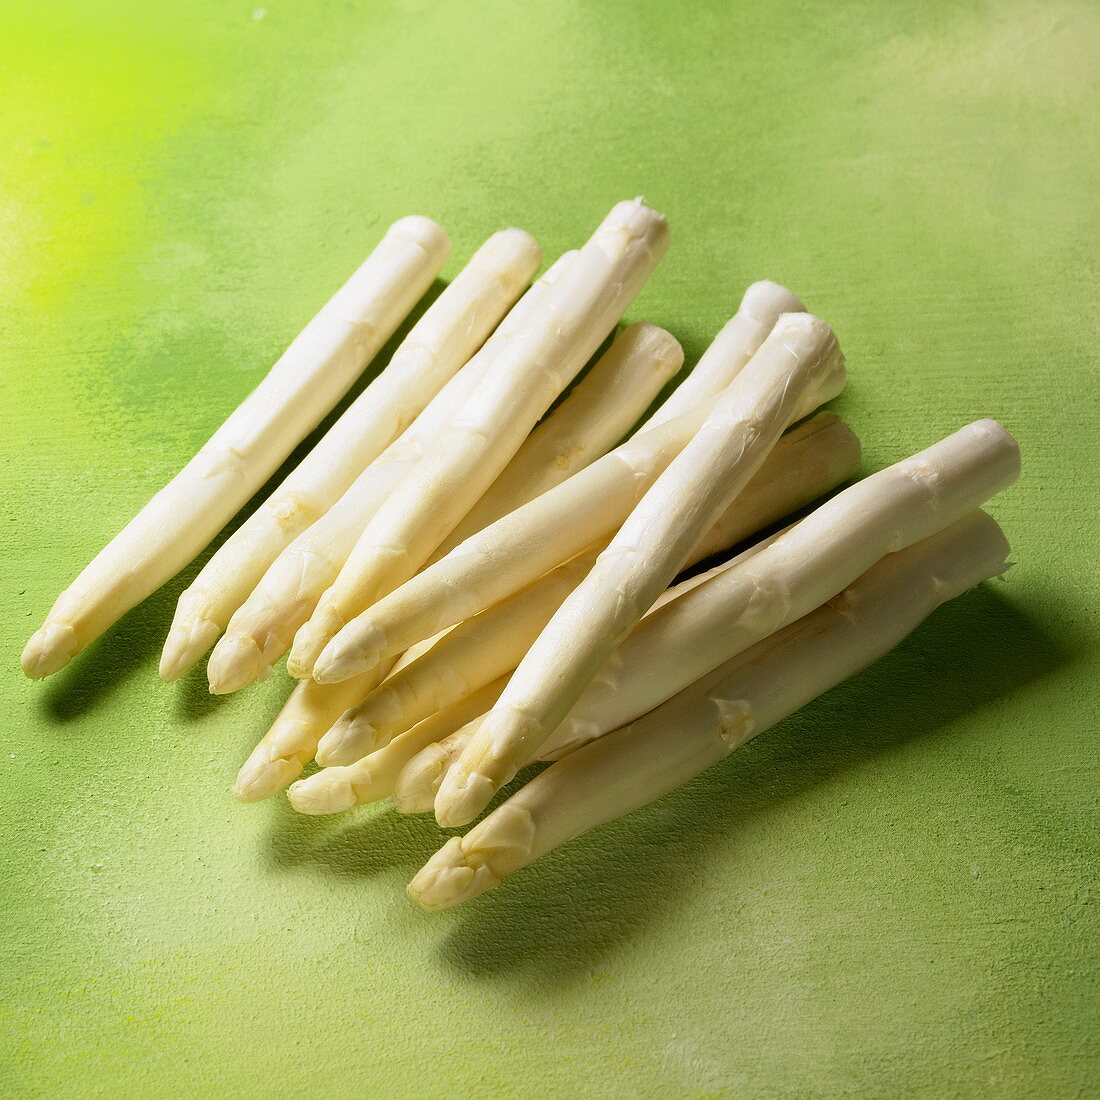 White asparagus on green background